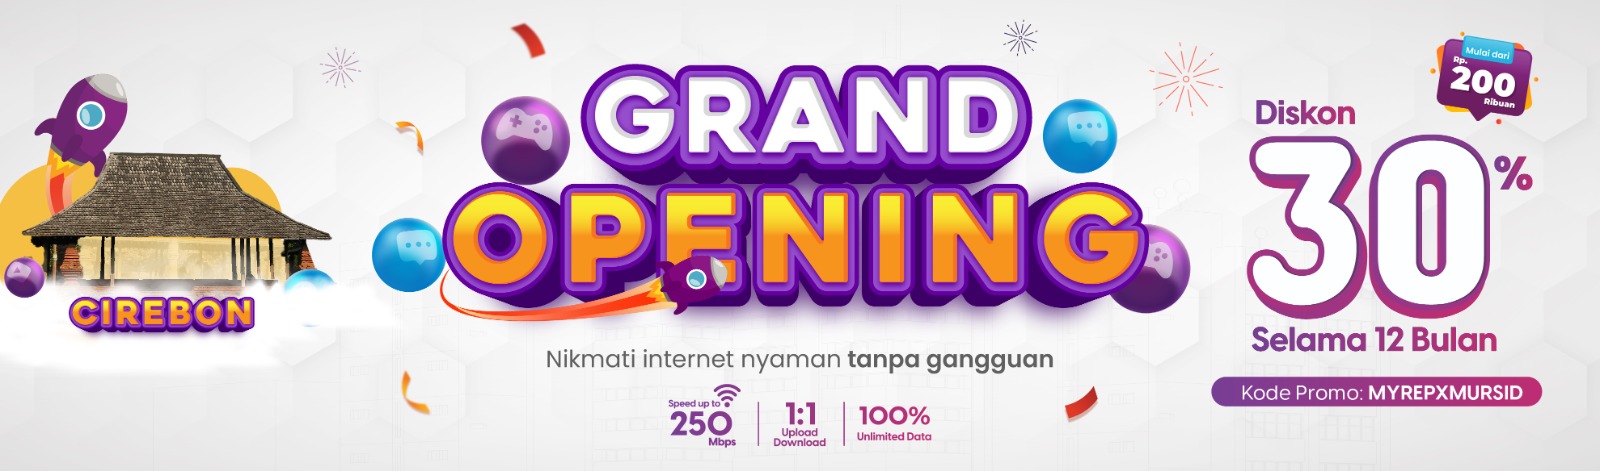 Opening Branch Cirebon